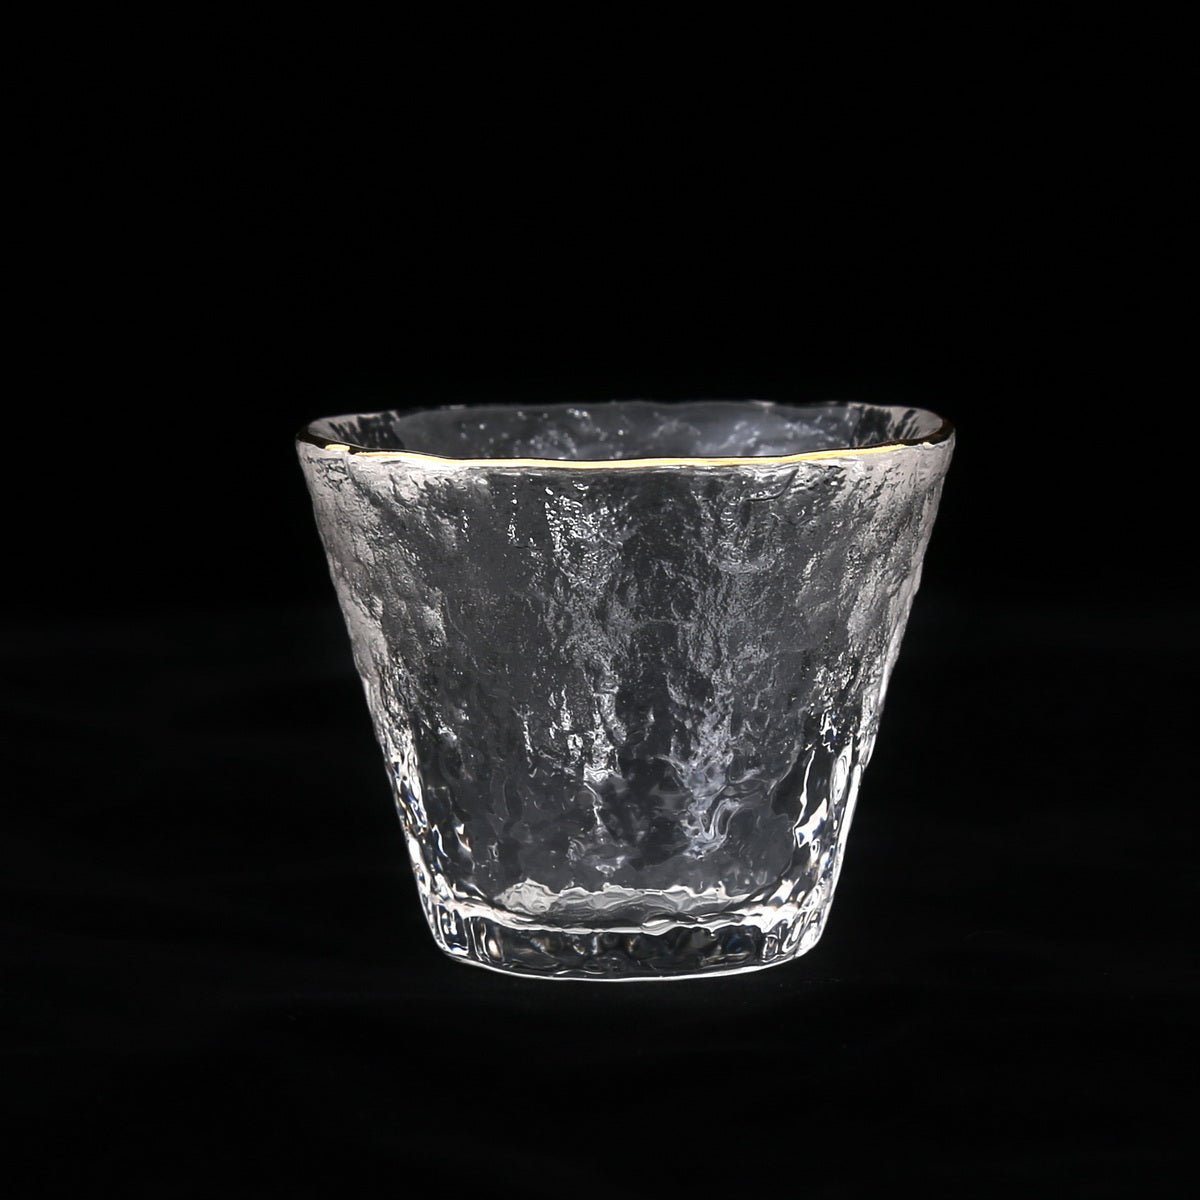 Hand-made Unique Frozen Texture Glassware Gift Tea Set - Taishan Tea Club